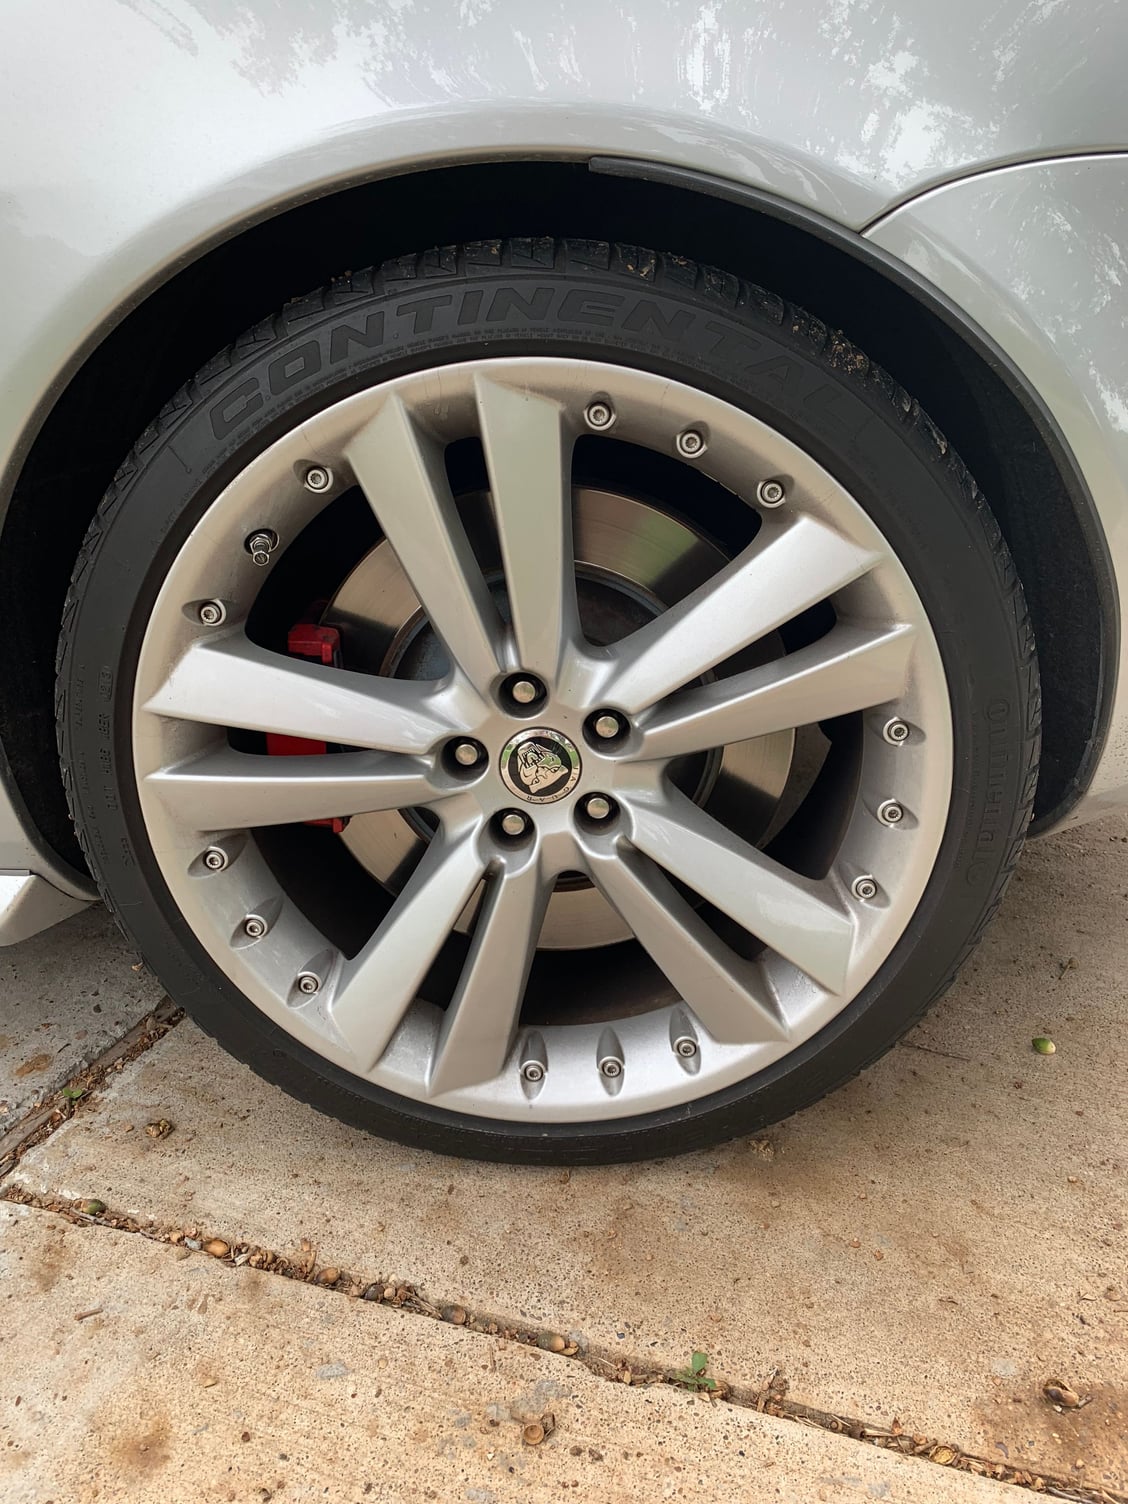 Wheels and Tires/Axles - Kalimnos 20inch wheels (full set) - Used - 2010 to 2015 Jaguar XK150 - San Antonio, TX 78202, United States